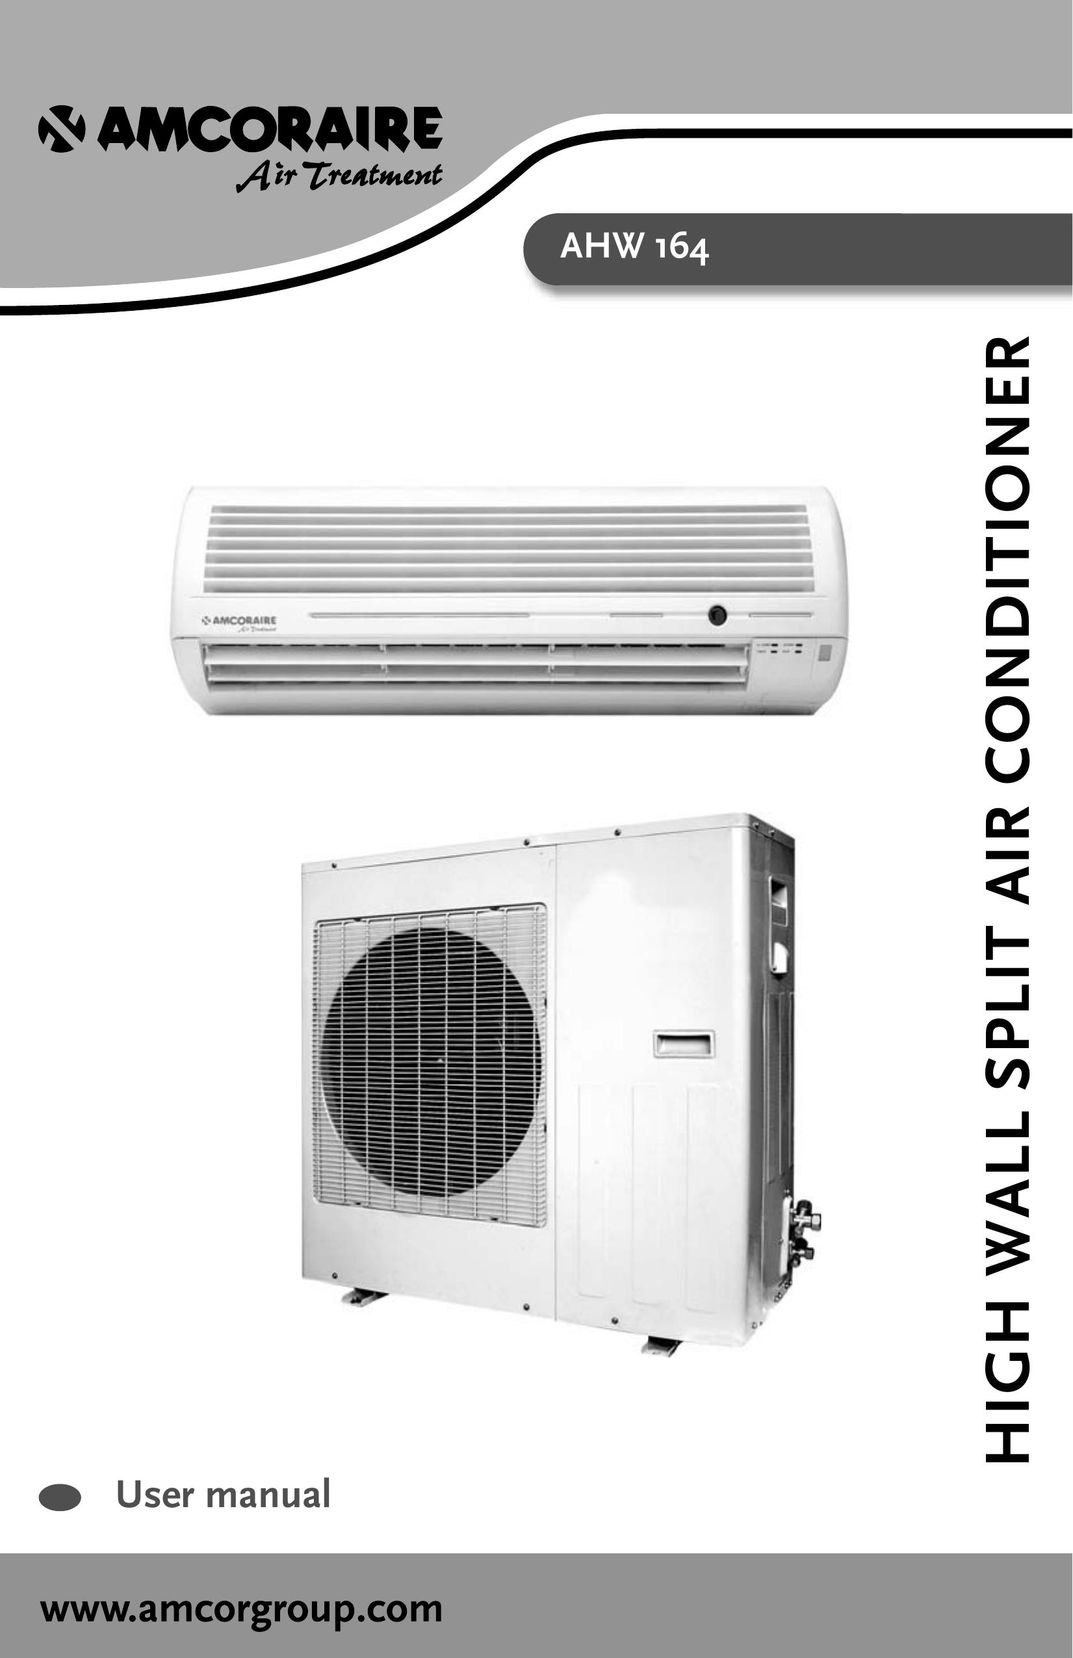 Amcor AHW 164 Air Conditioner User Manual